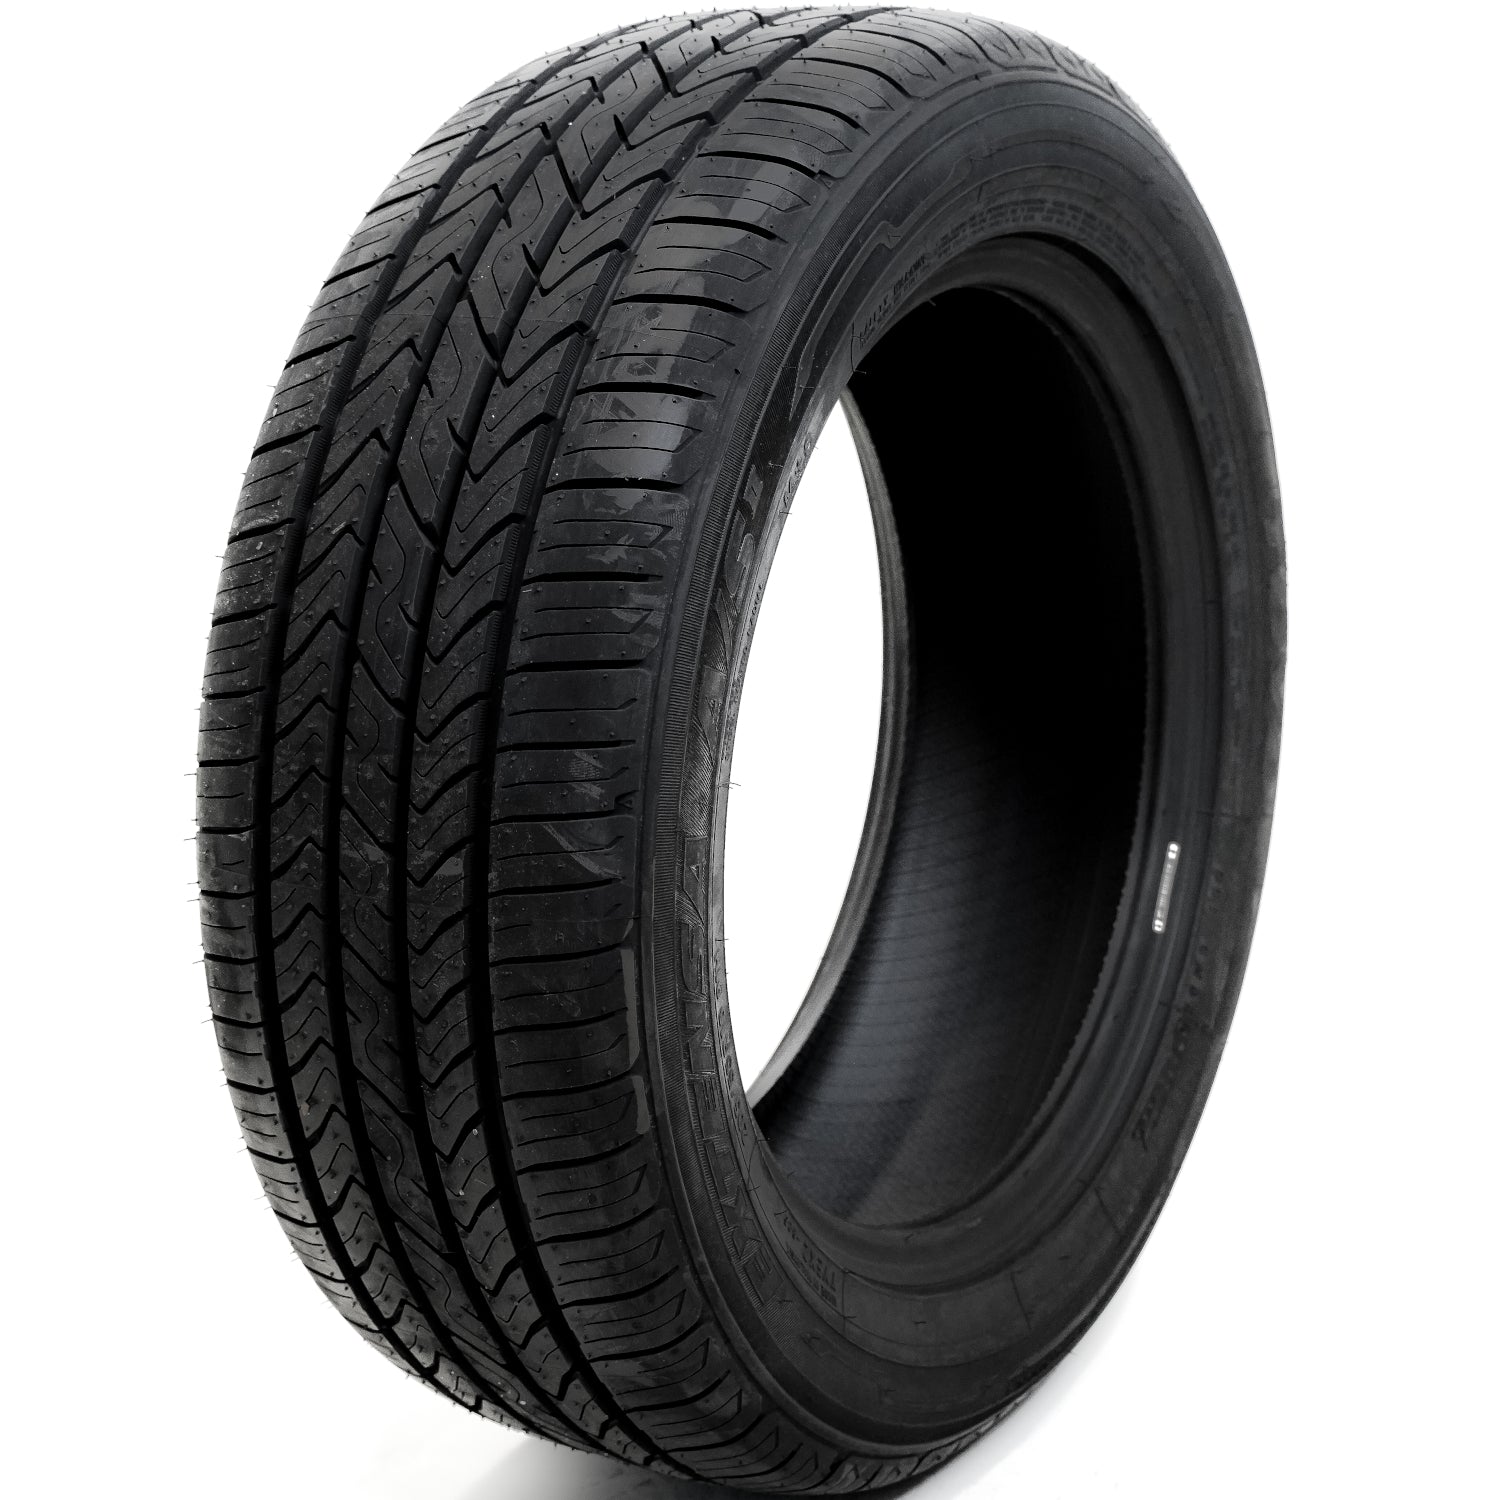 TOYO TIRES EXTENSA A/S II 215/60R17 (27.2X8.5R 17) Tires